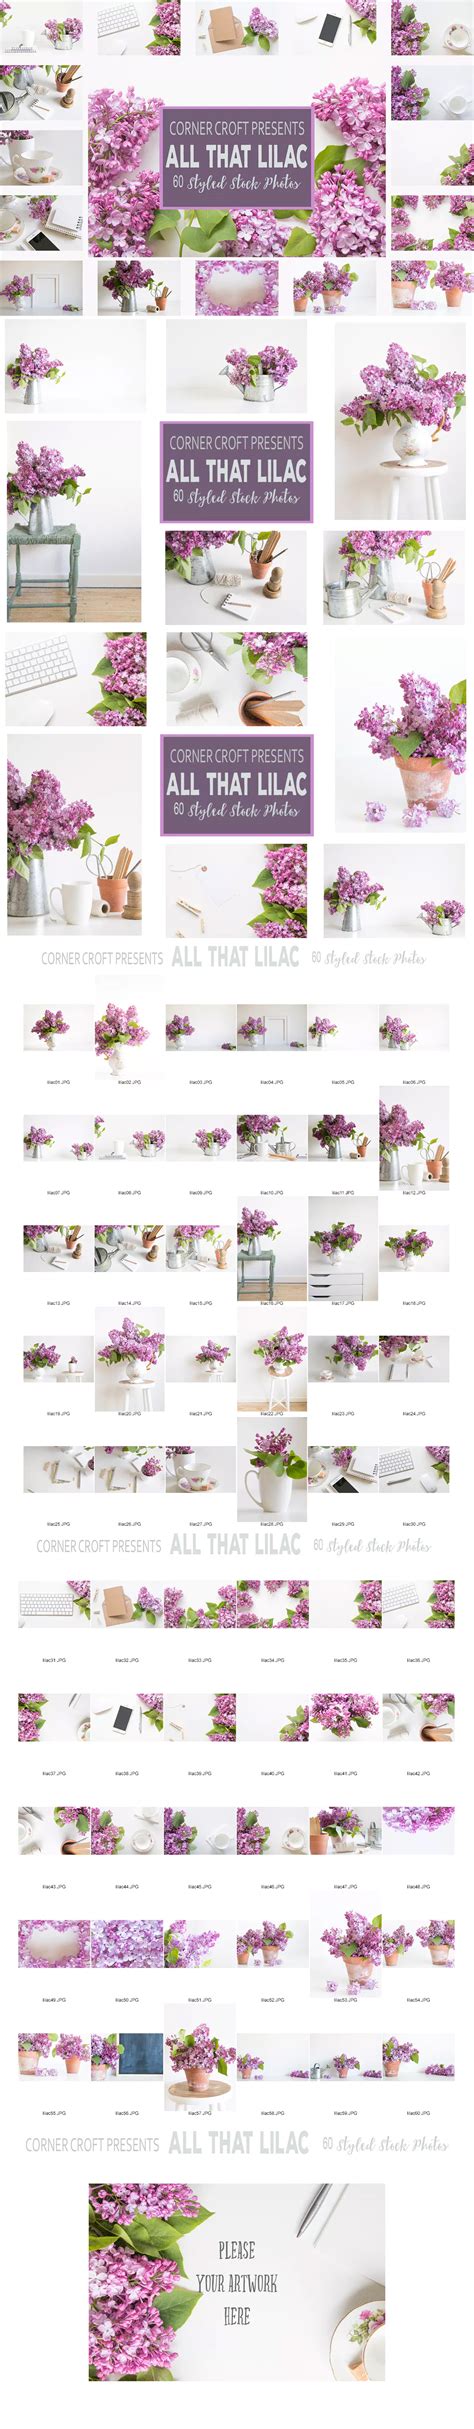 Lilac Styled Stock Photo Bundle by cornercroft on Envato Elements | Styled stock photos, Styled ...